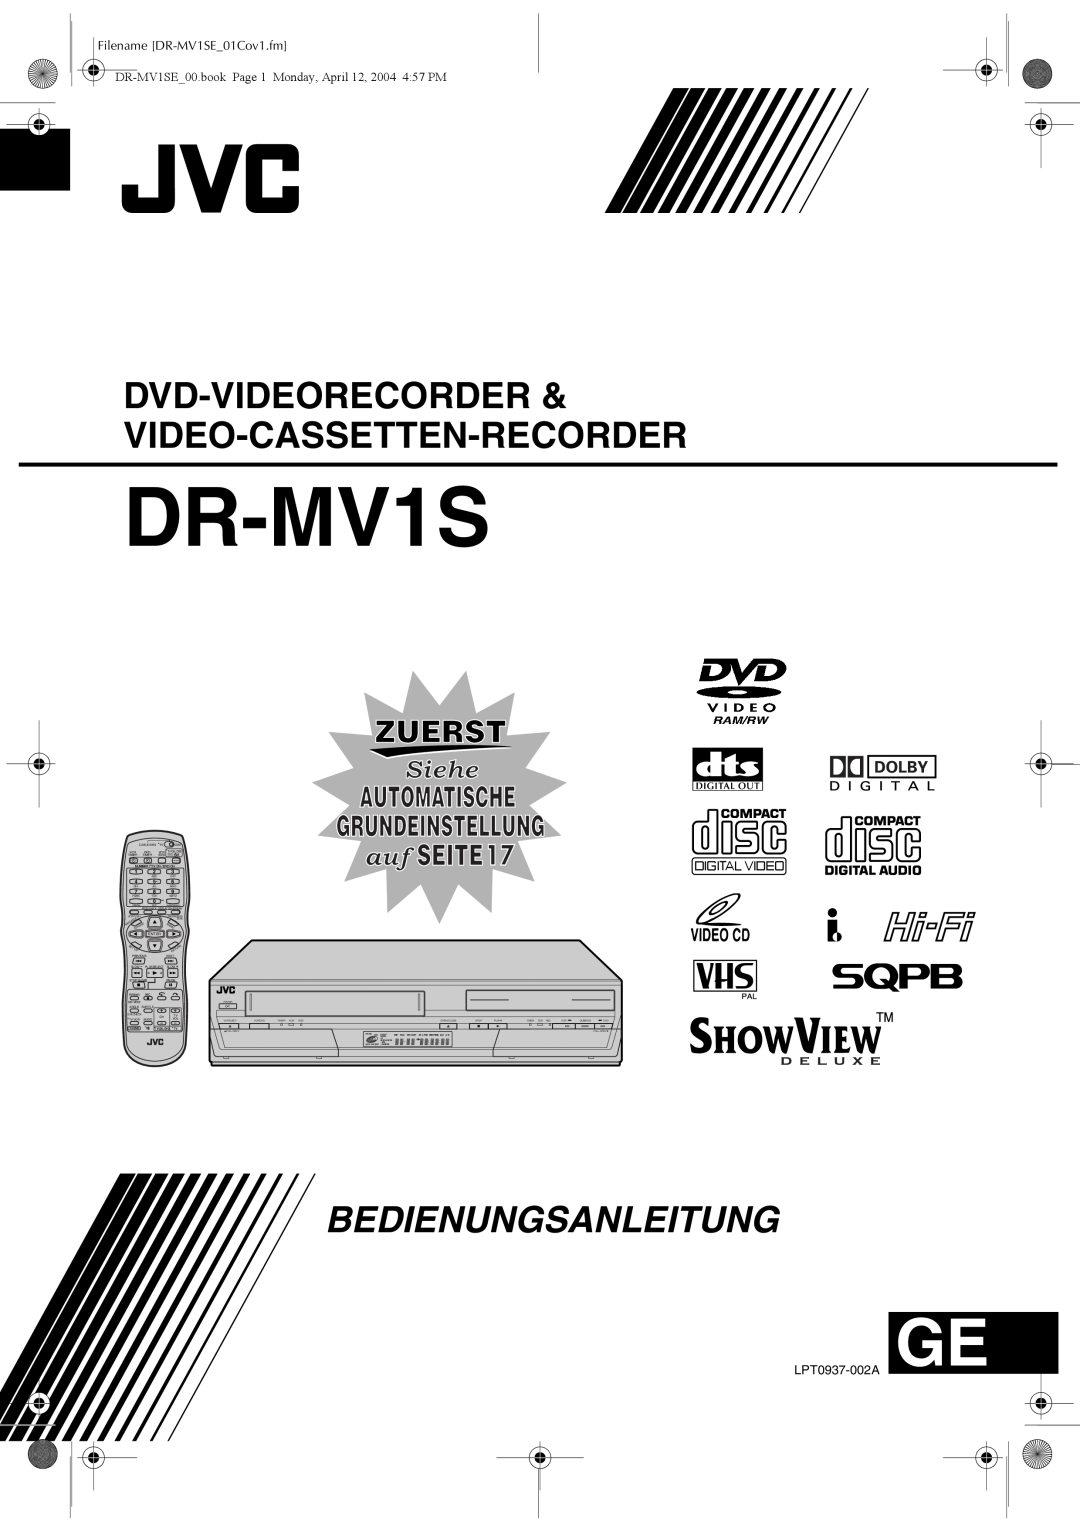 JVC manual Bedienungsanleitung, Dvd-Videorecorder & Video-Cassetten-Recorder, Filename DR-MV1SE01Cov1.fm, Enter, Menu 